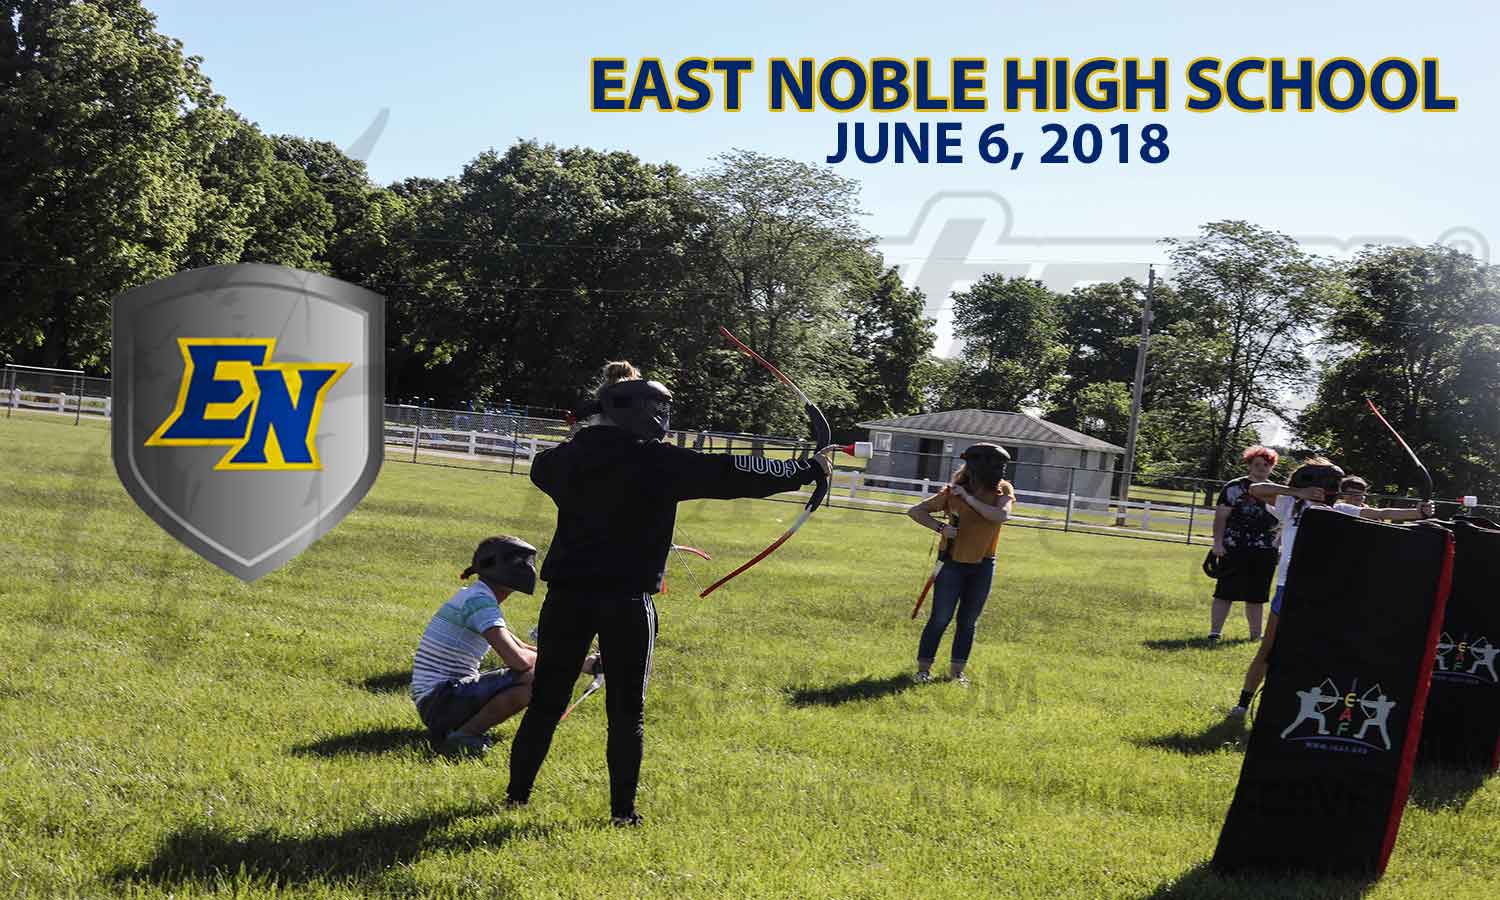 East Noble High School